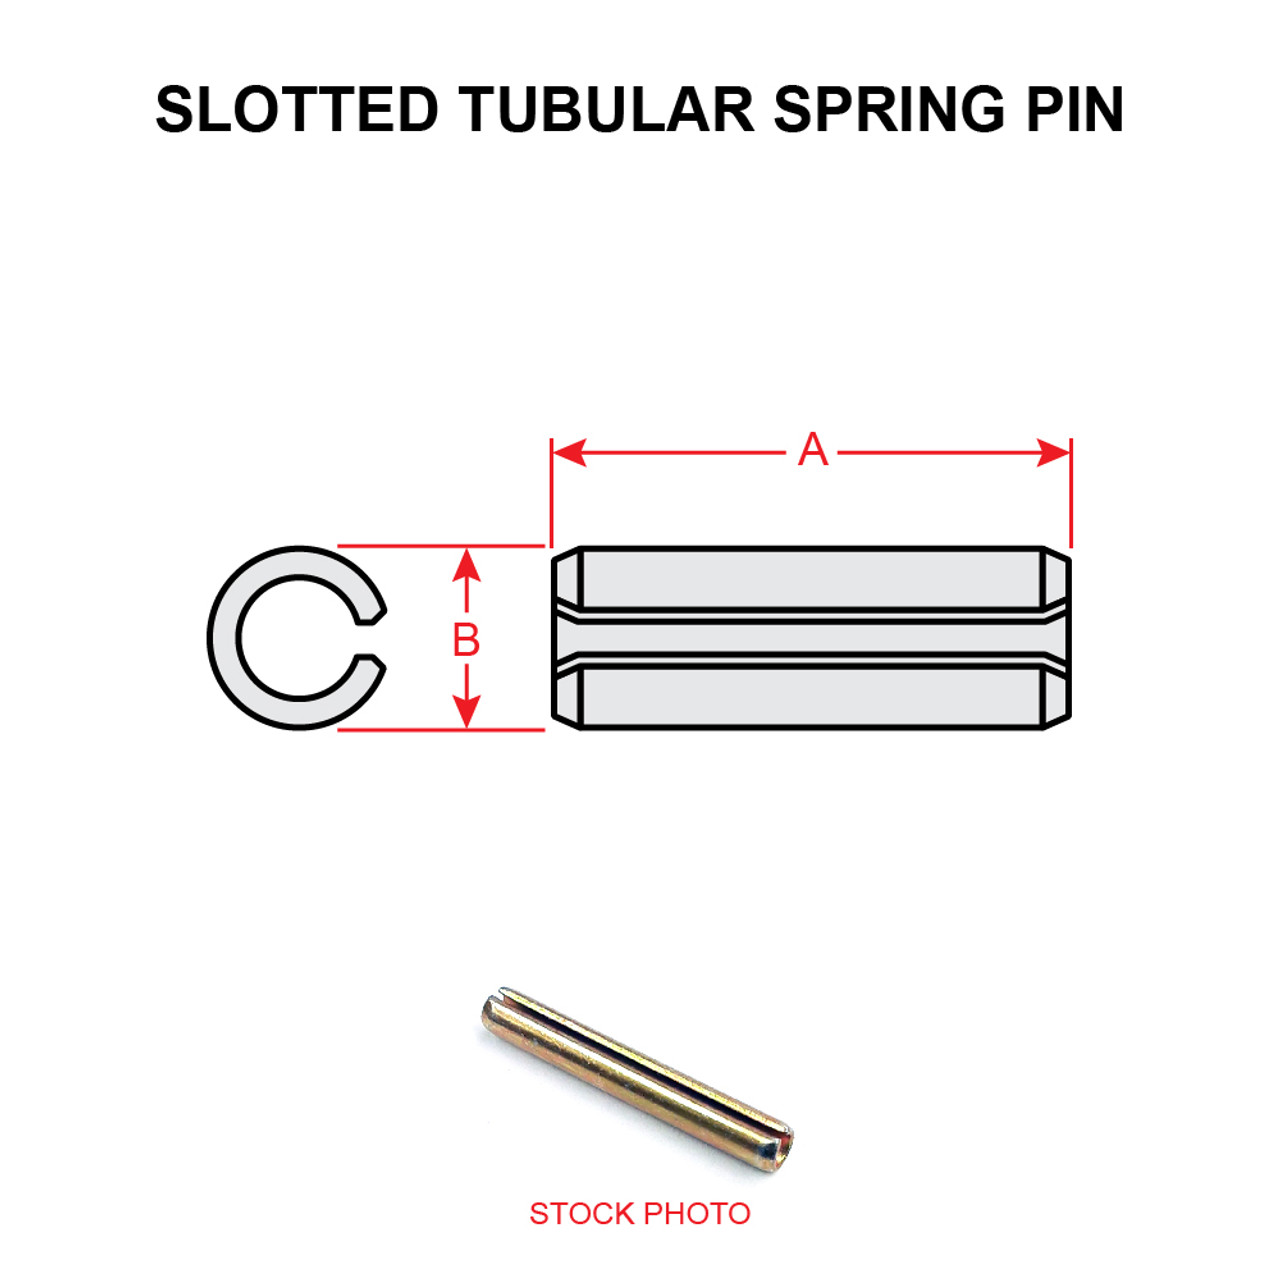 MS16562-37   SLOTTED TUBULAR SPRING PIN